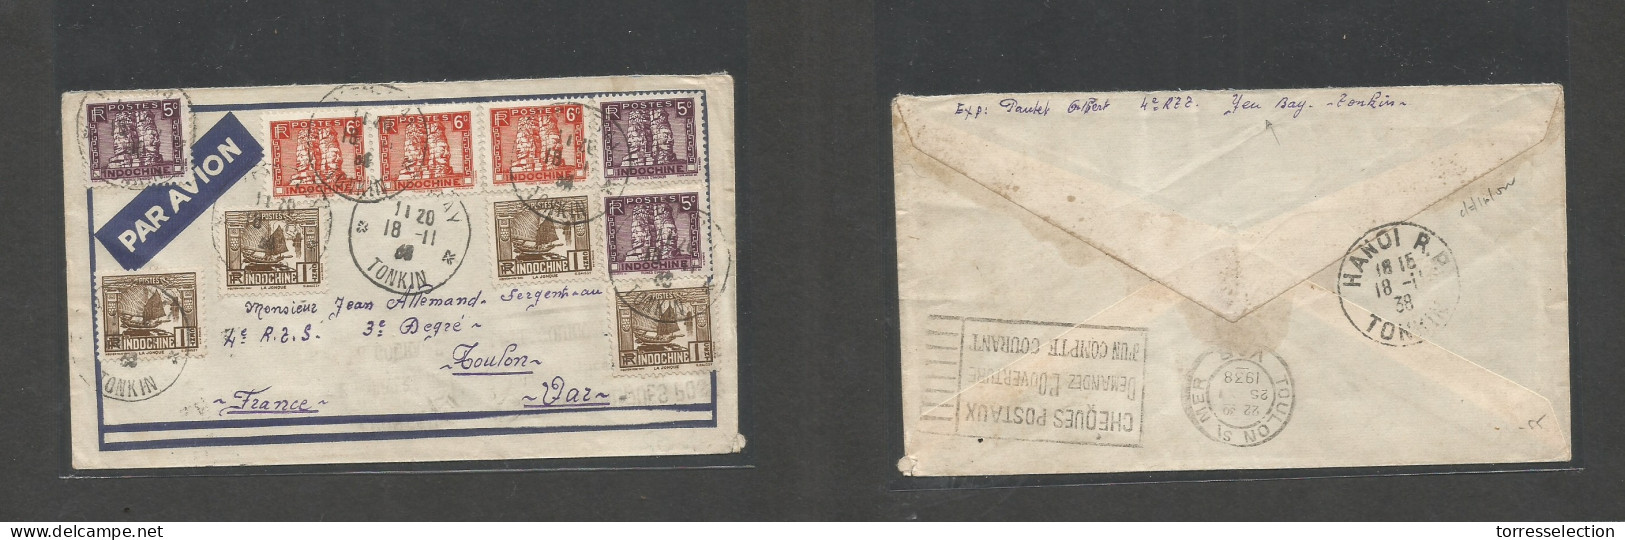 INDOCHINA. 1954 (18 Nov) Yen Bay, Tonkin - Toulon, France (25 Nov) Via Hanoi. Air Multifkd Env. Nice Item + Origin. - Altri - Asia